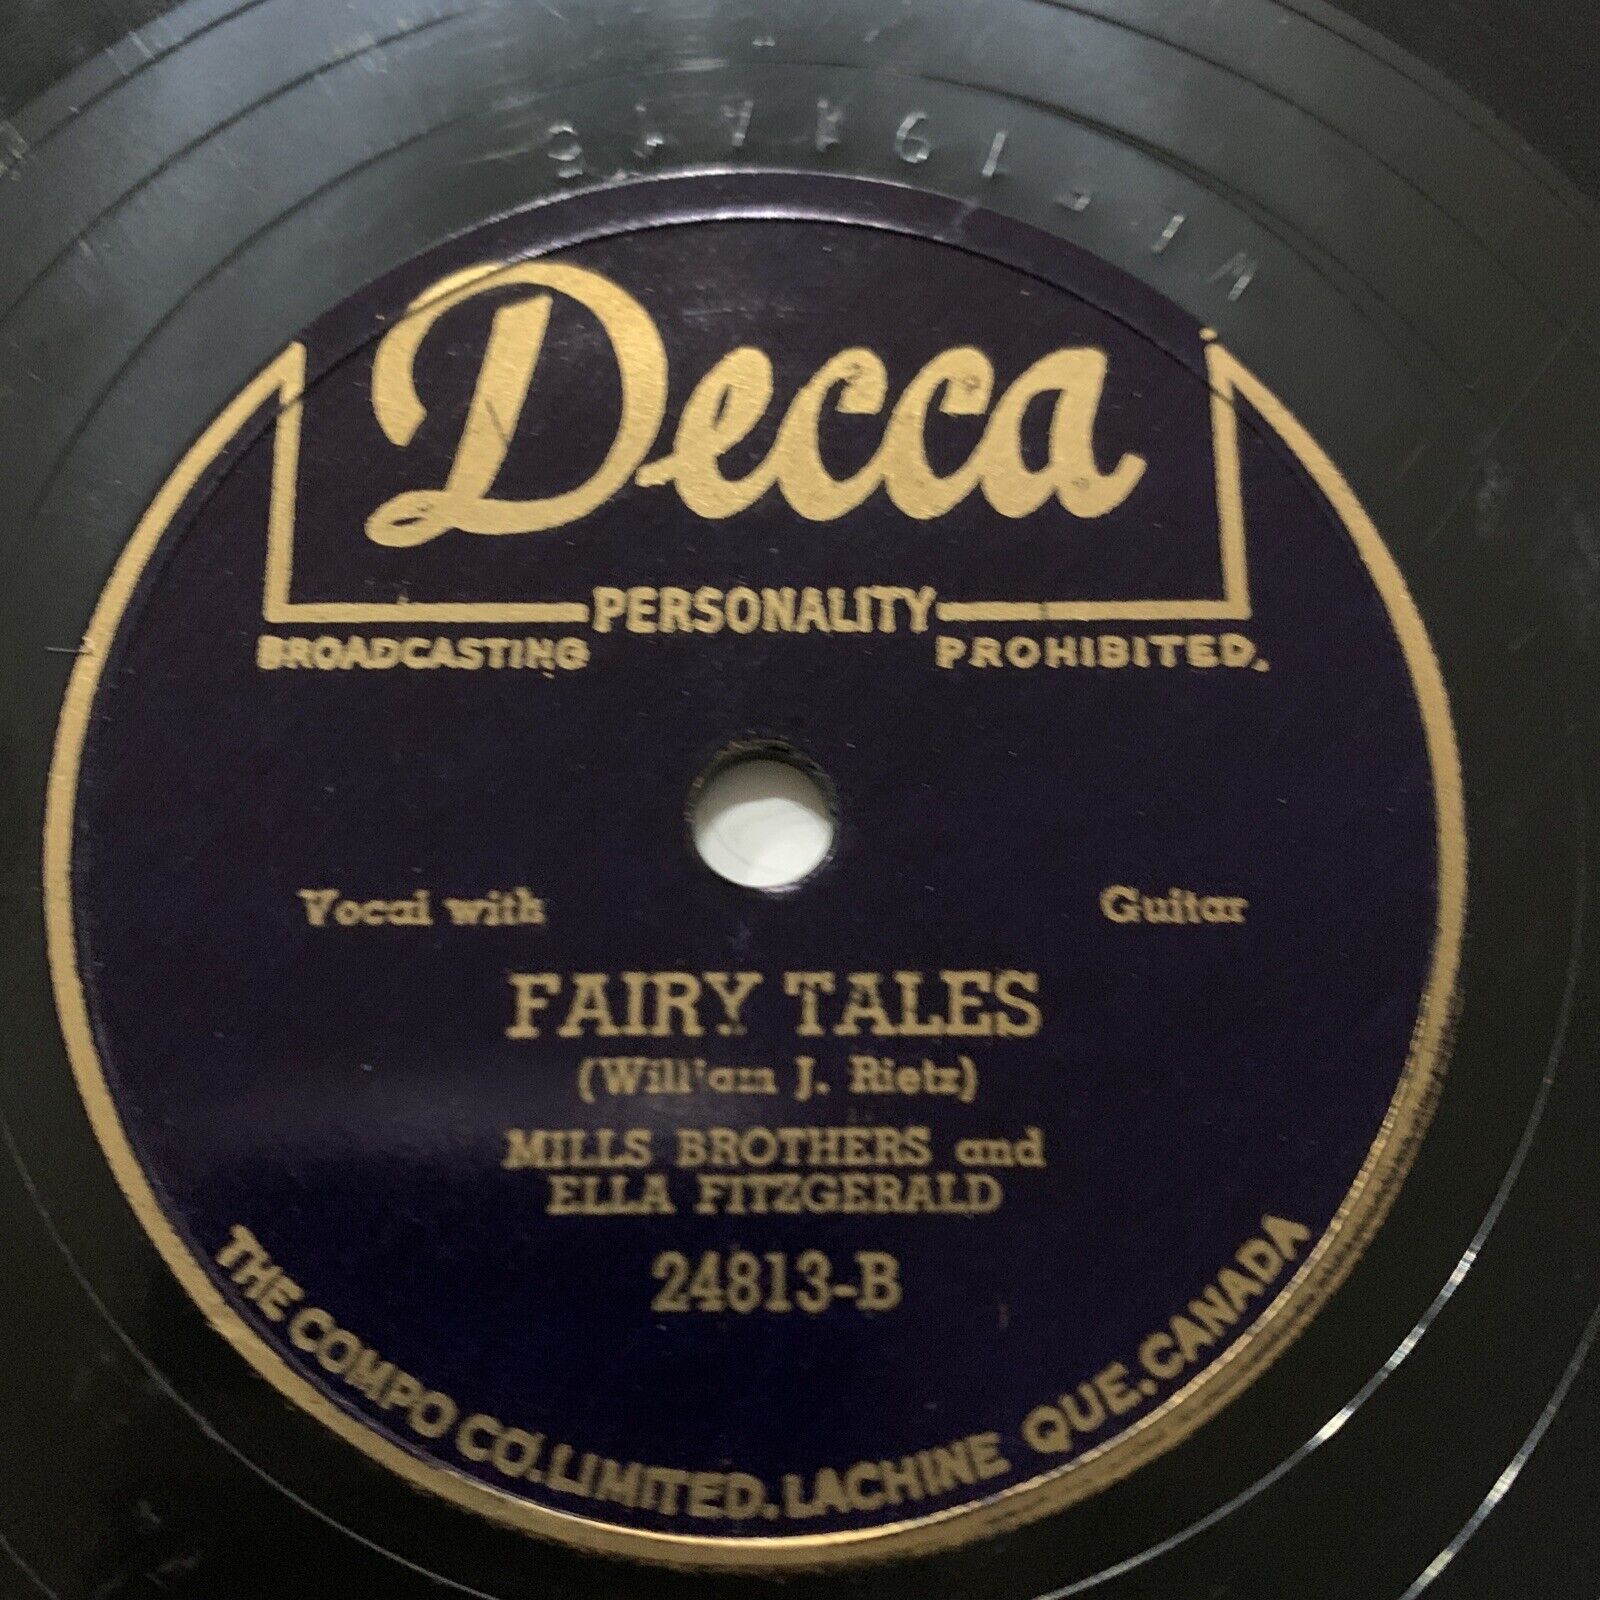 Fairy Tales I gotta have my baby back Ella Fitzgerald & Mills Brothers 24813 78